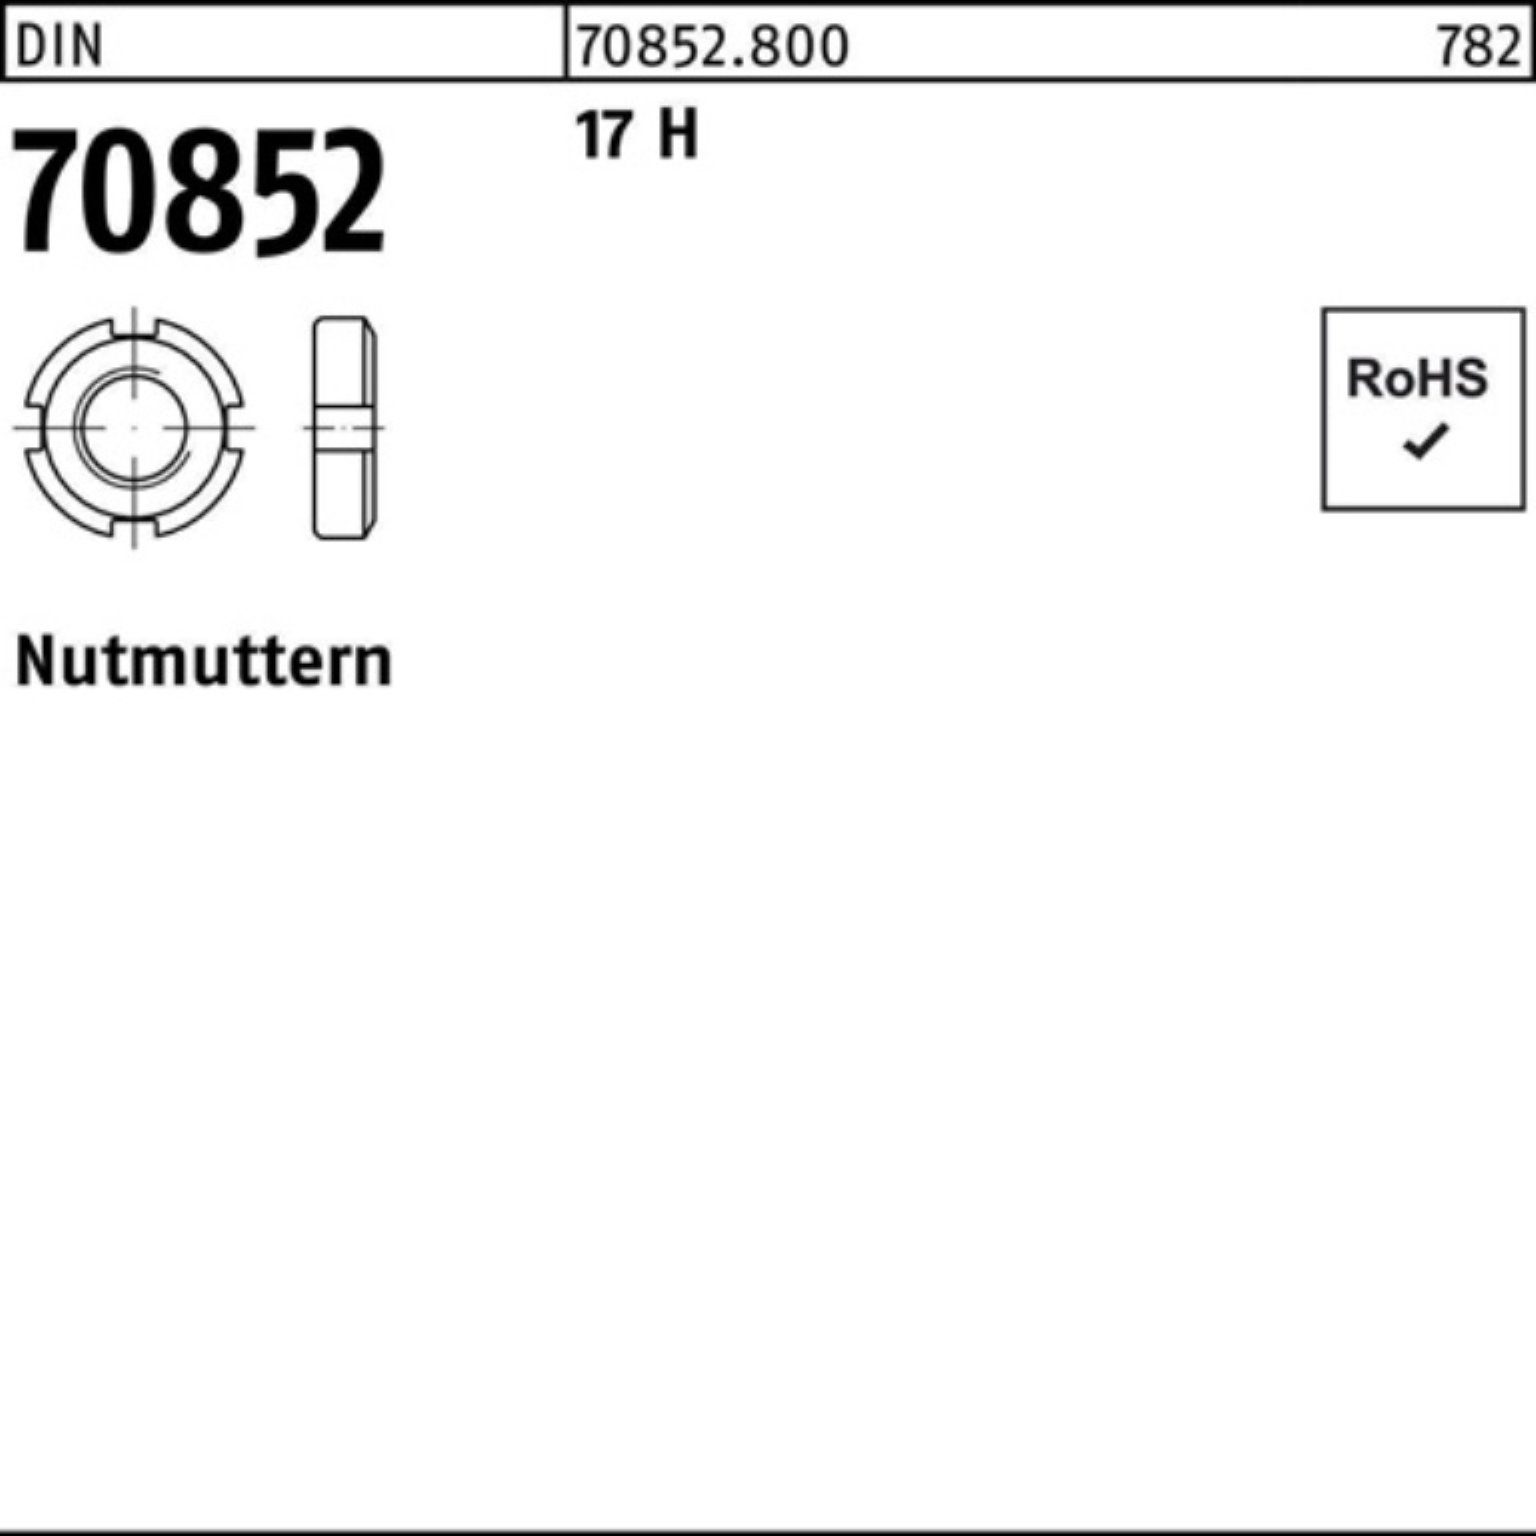 Reyher Nutmutter 100er Pack Nutmutter DIN 70852 M85x 1,5 17 H 1 Stück DIN 70852 17 H N | Muttern